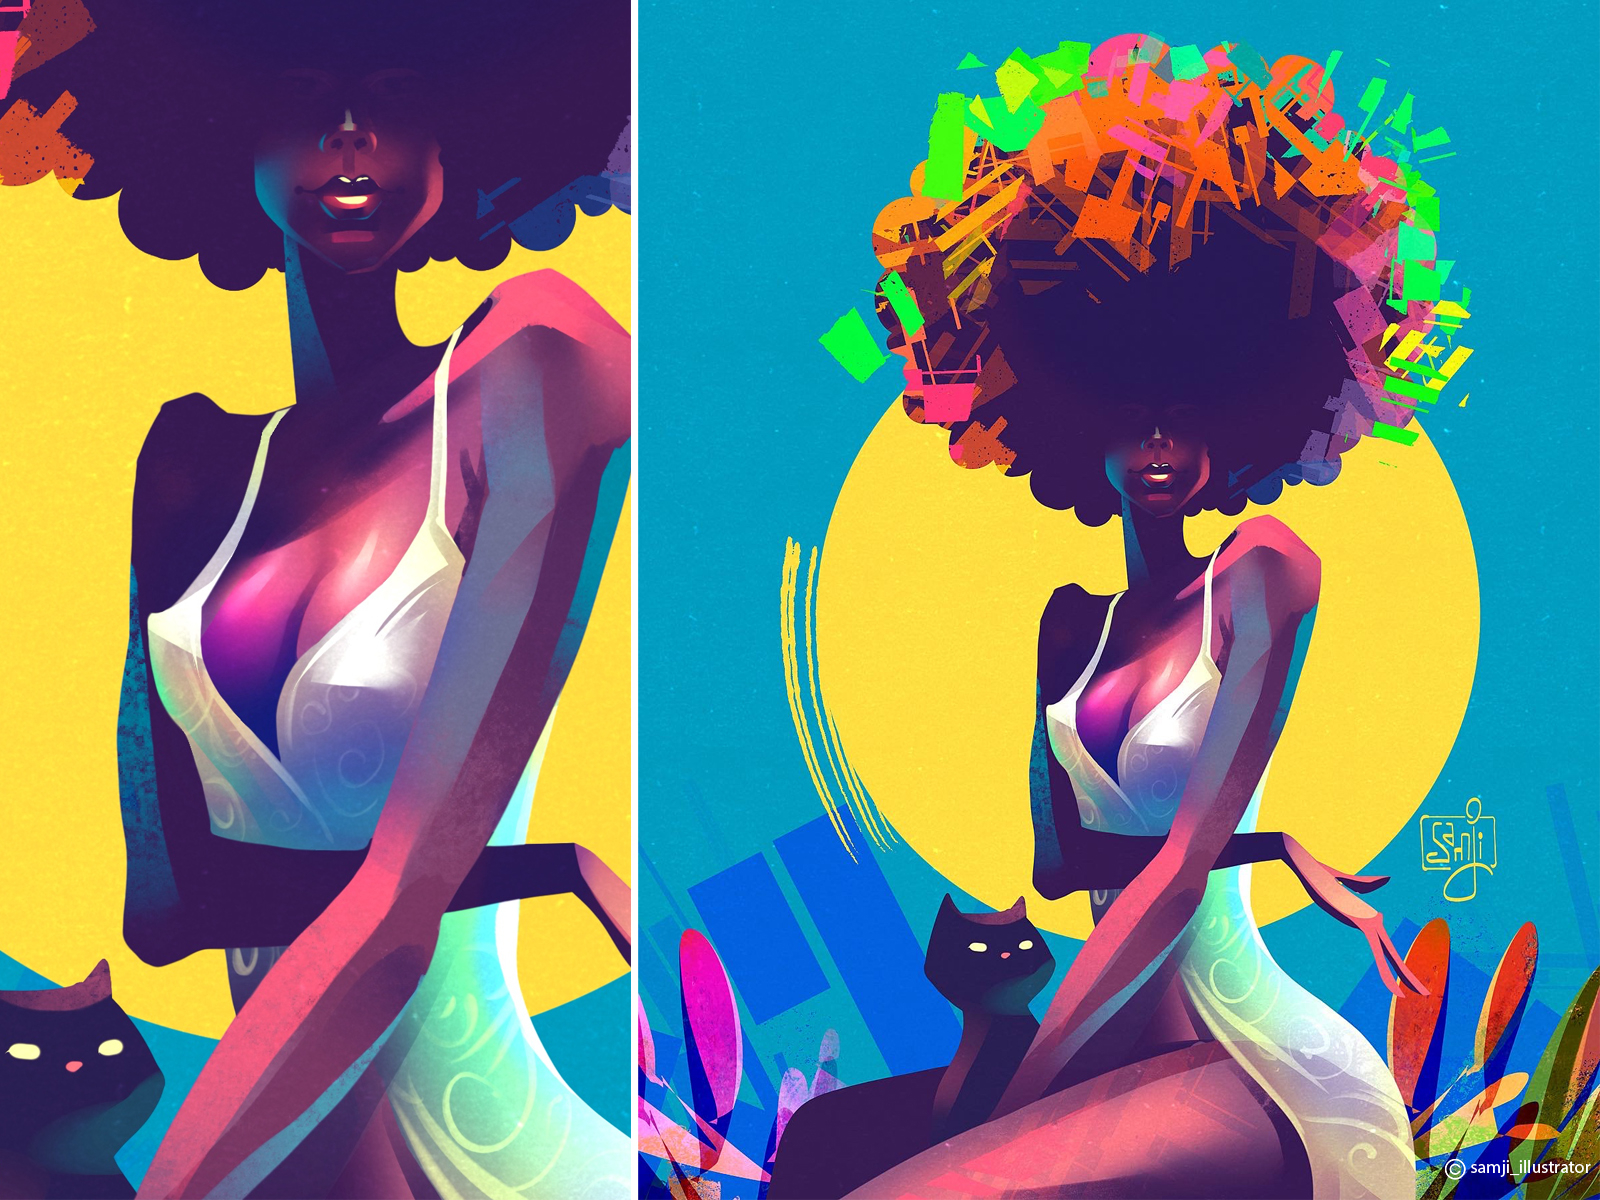 Caverito freelance illustrator samji illustrator cat afro girl editorial illustration procreate character design illustrator illustration